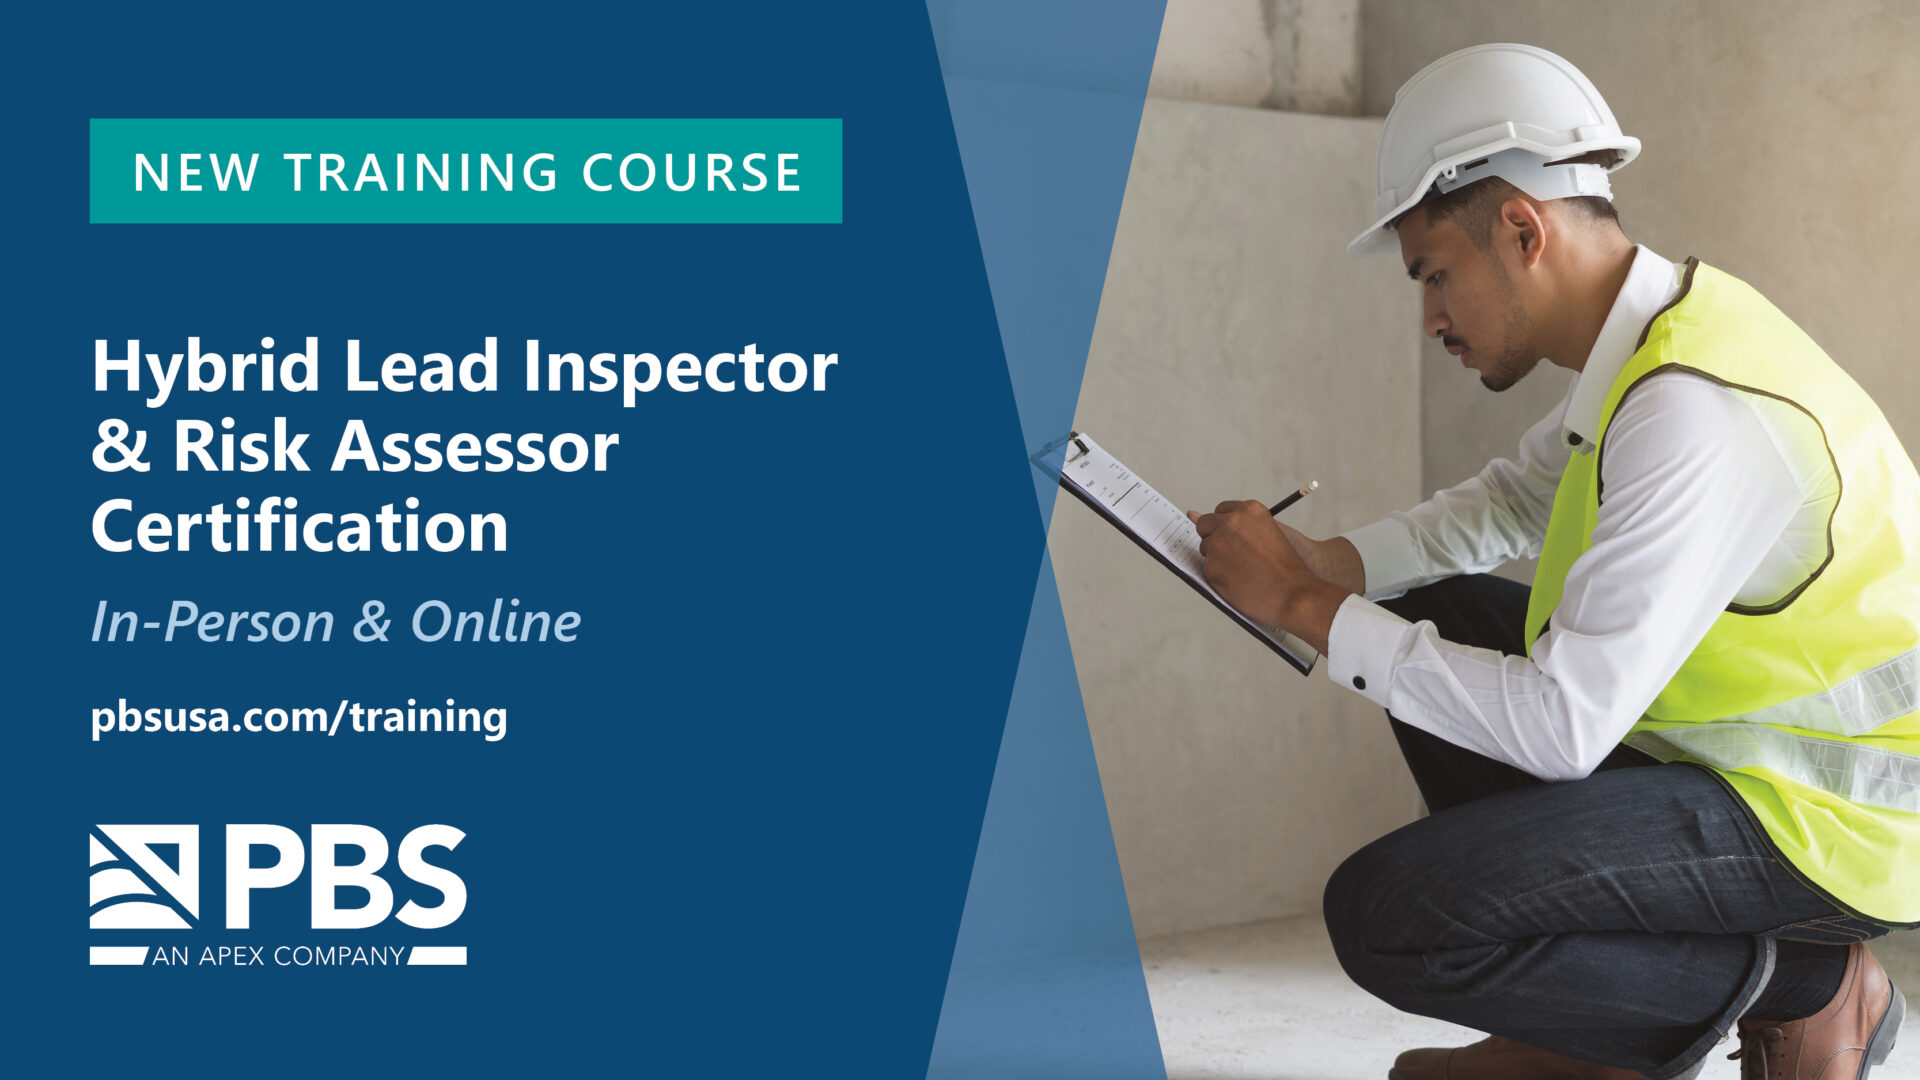 New Lead Inspector & Risk Assessor Hybrid Certification Course